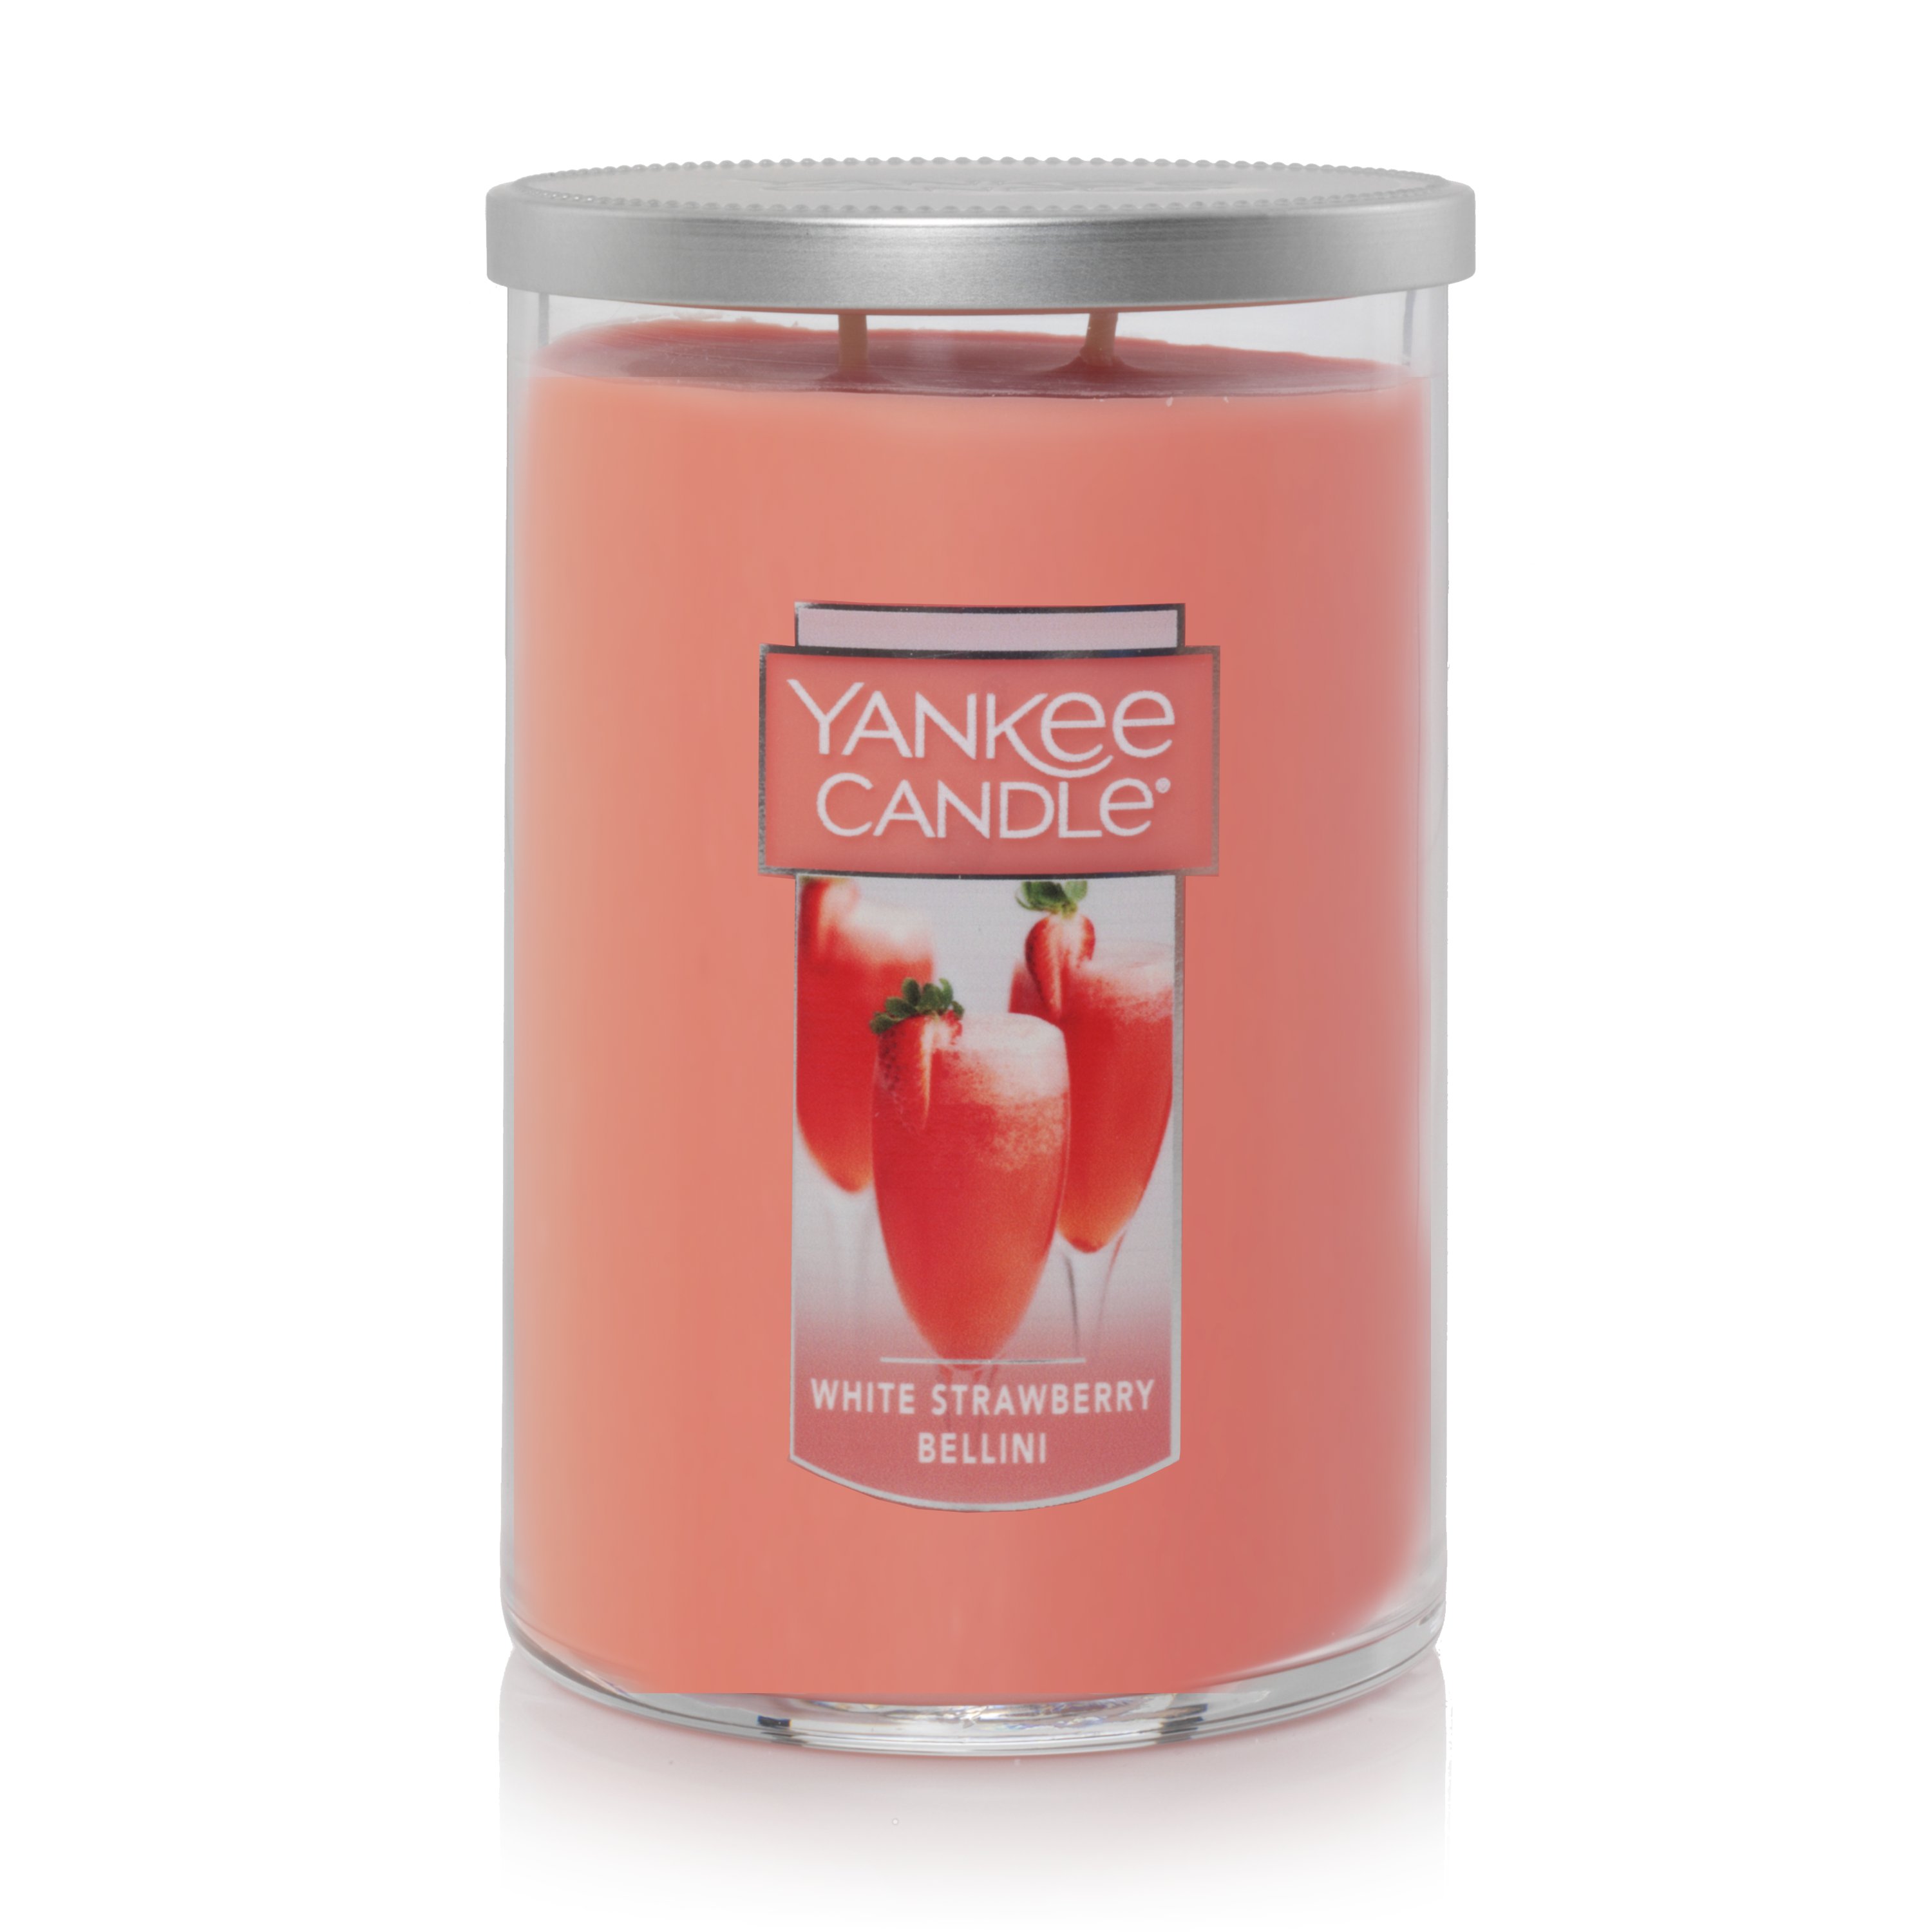  Yankee Candle White Strawberry Bellini Wax Melts, 3